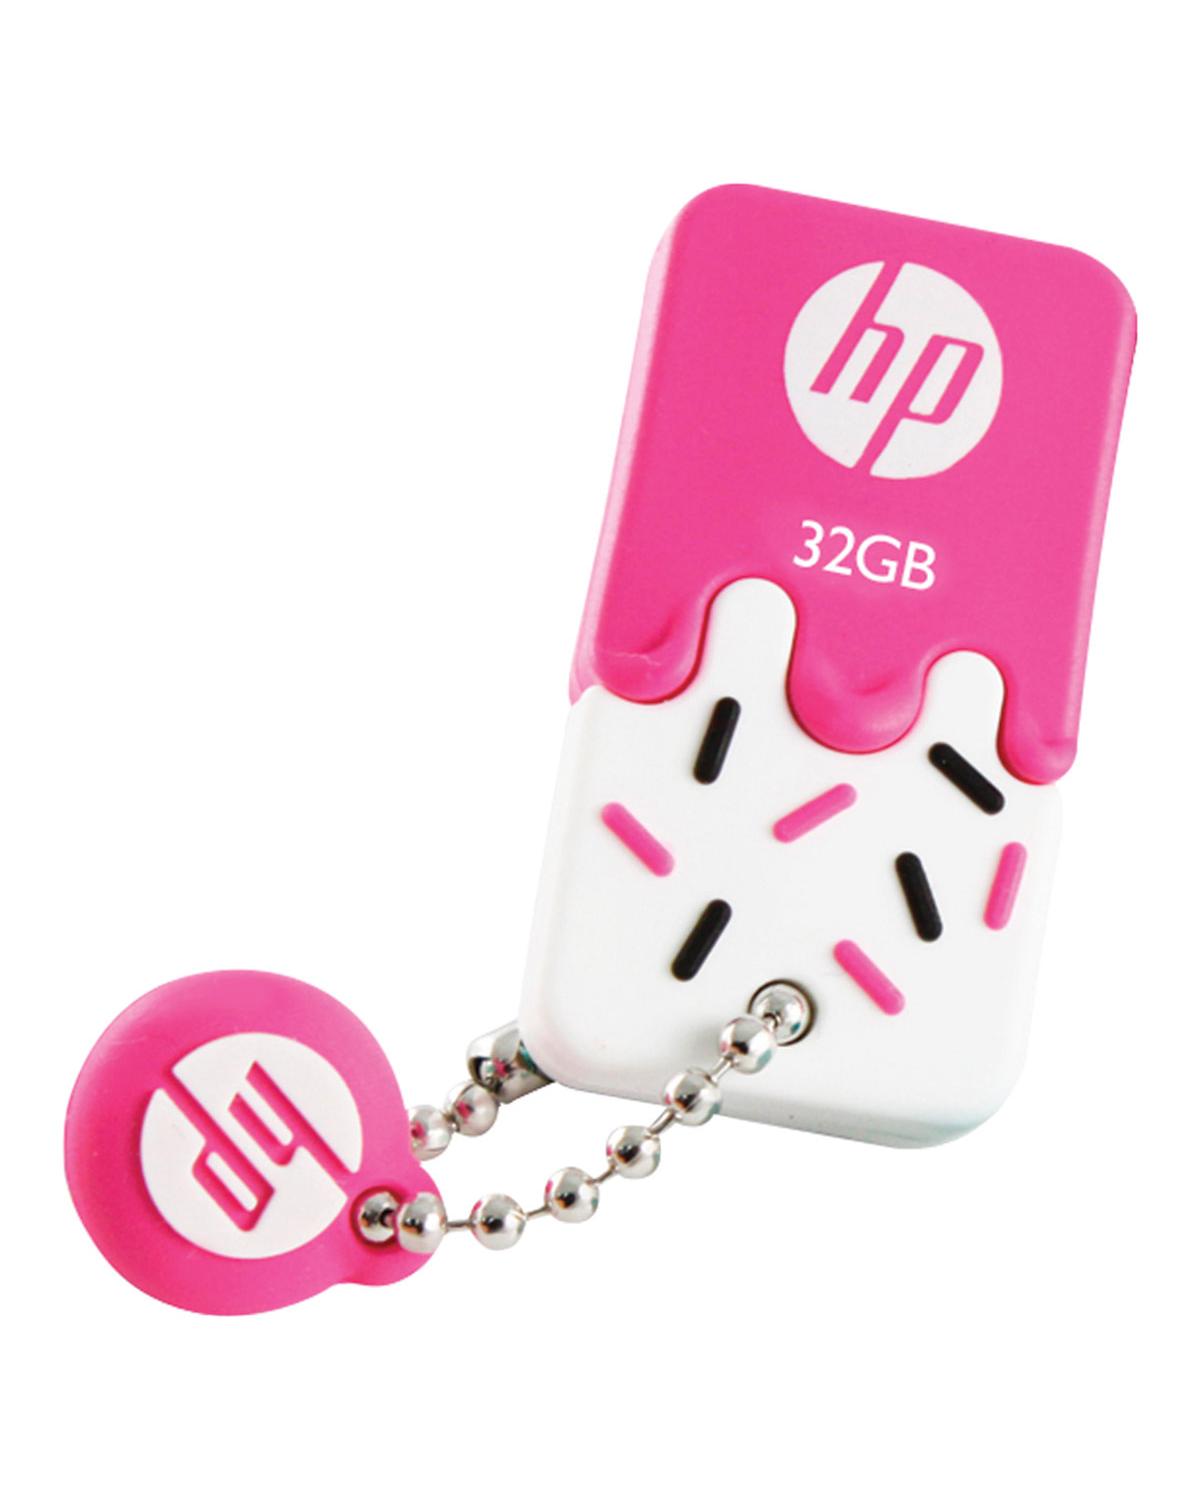 PEN DRIVE MINI HP USB 2.0 V178P 32GB PINK HPFD178P-32